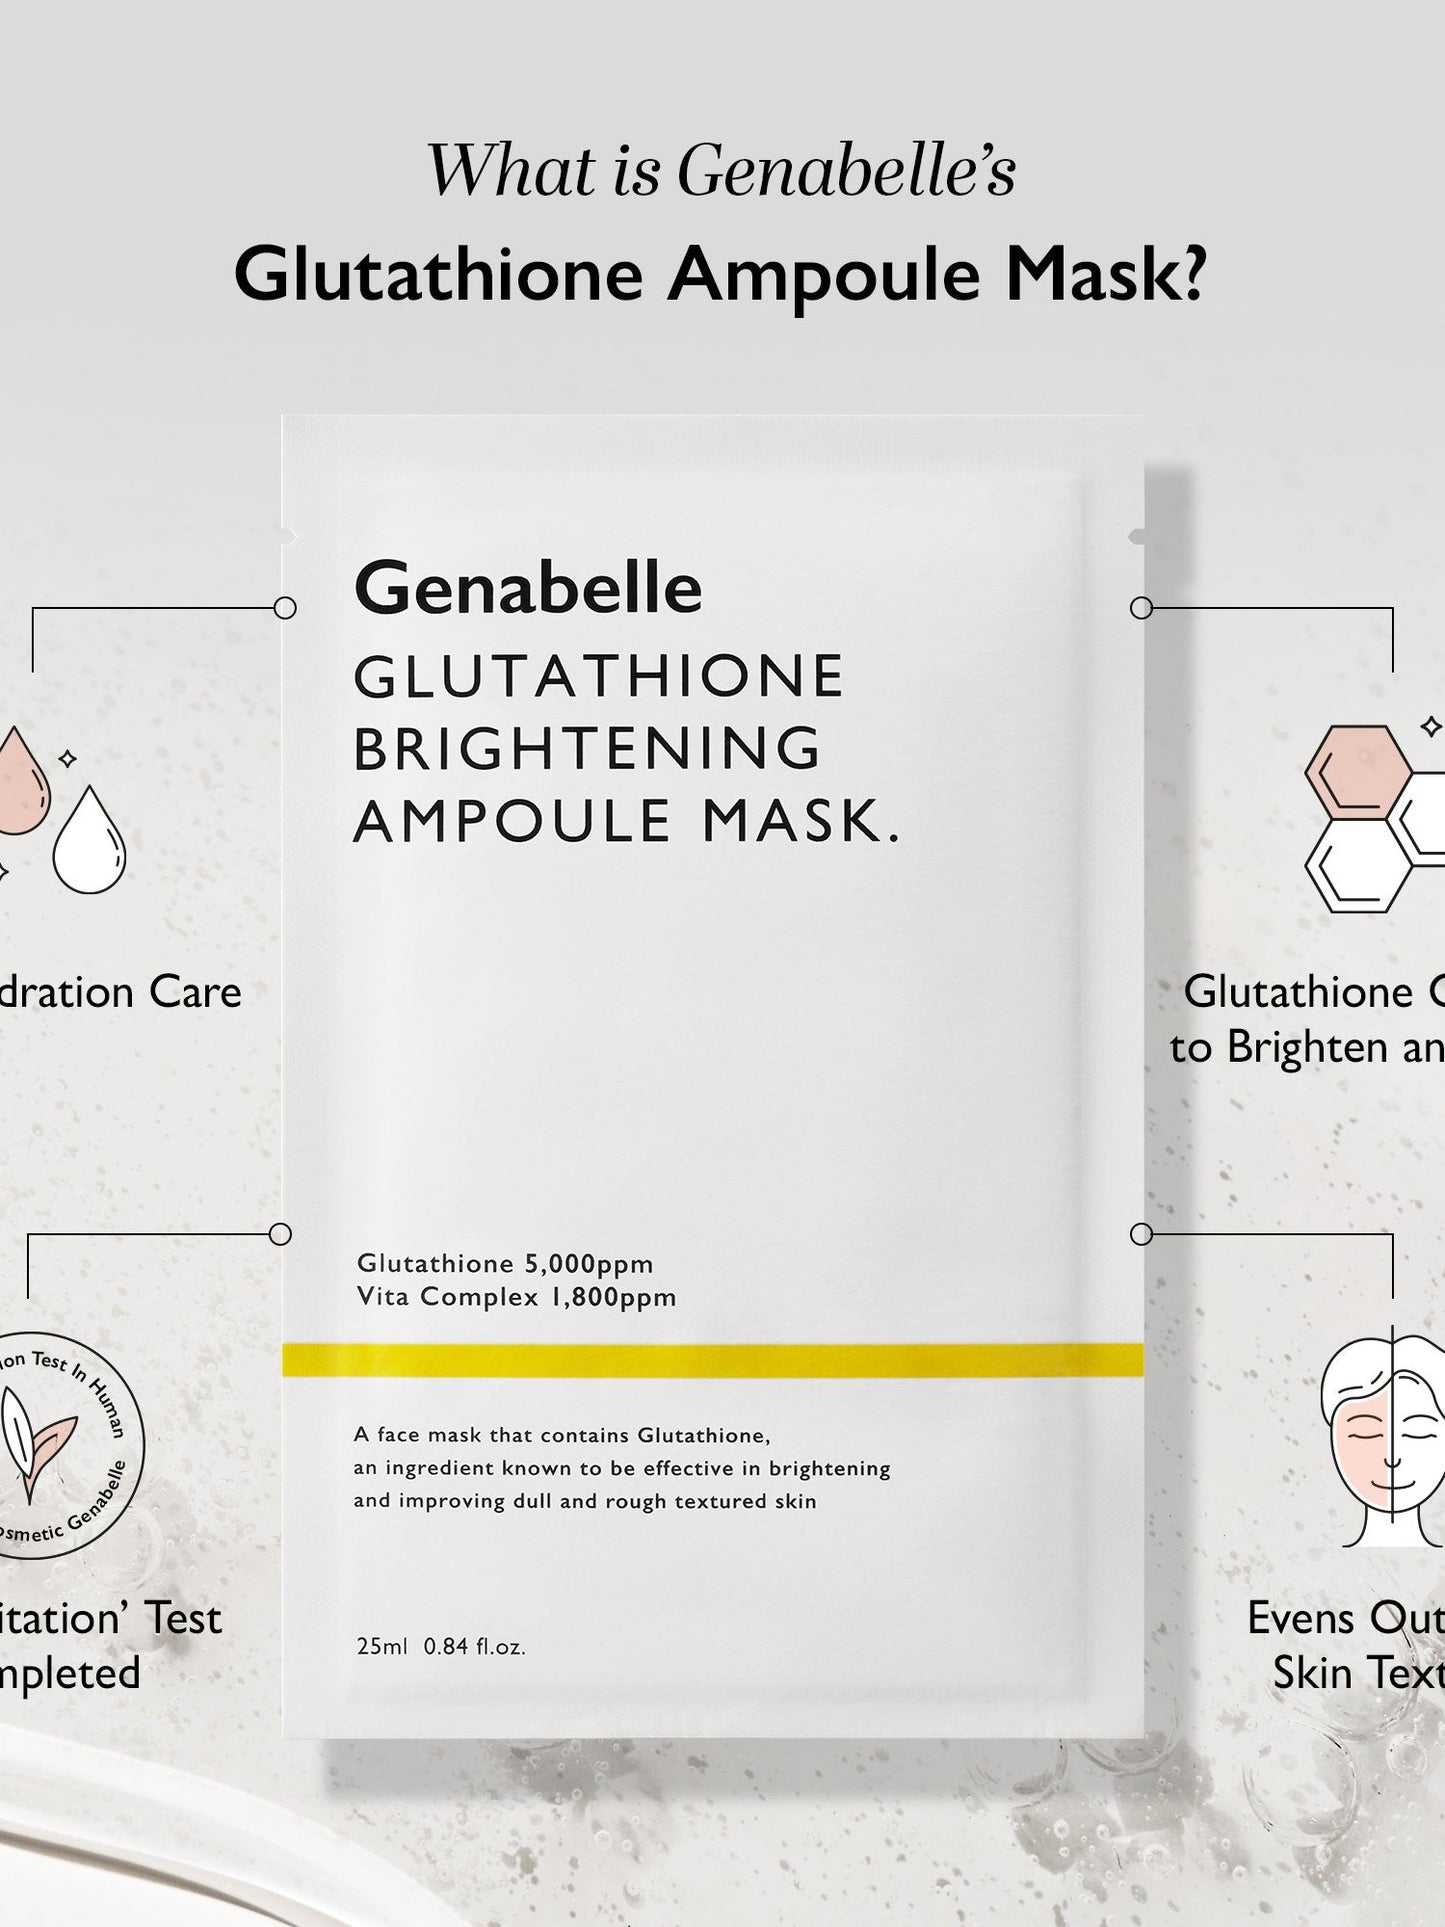 Genabelle GLUTATHIONE BRIGHTENING AMPOULE MASK